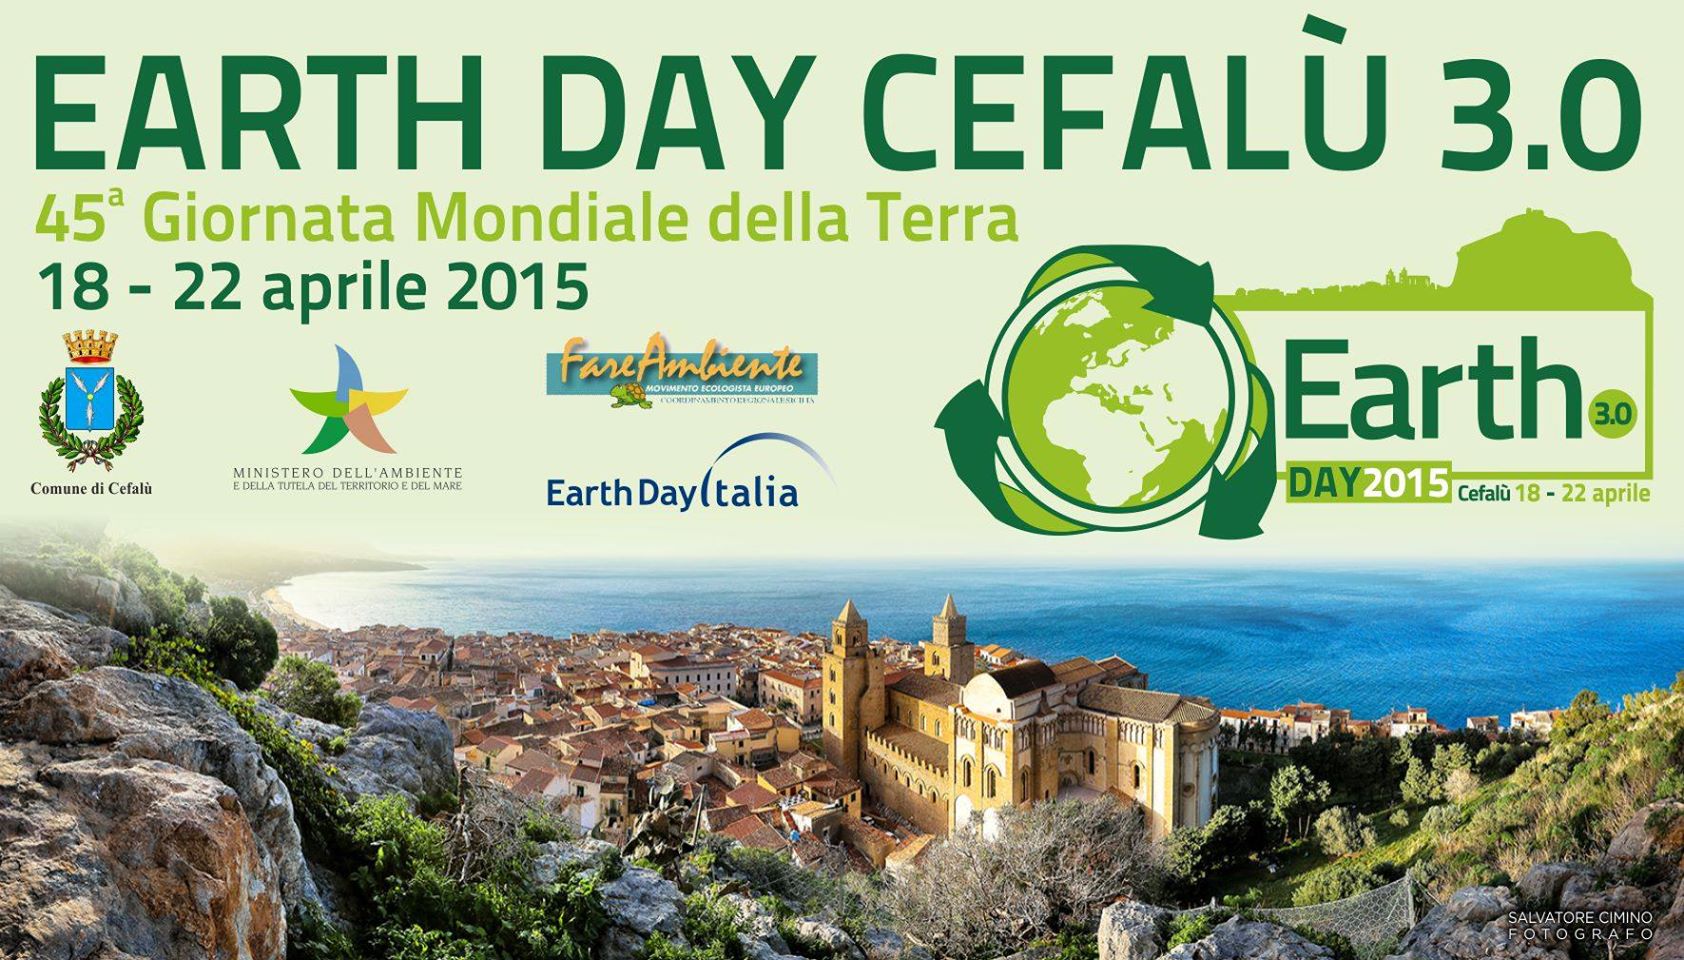 Earth Day Cefalu 3.0